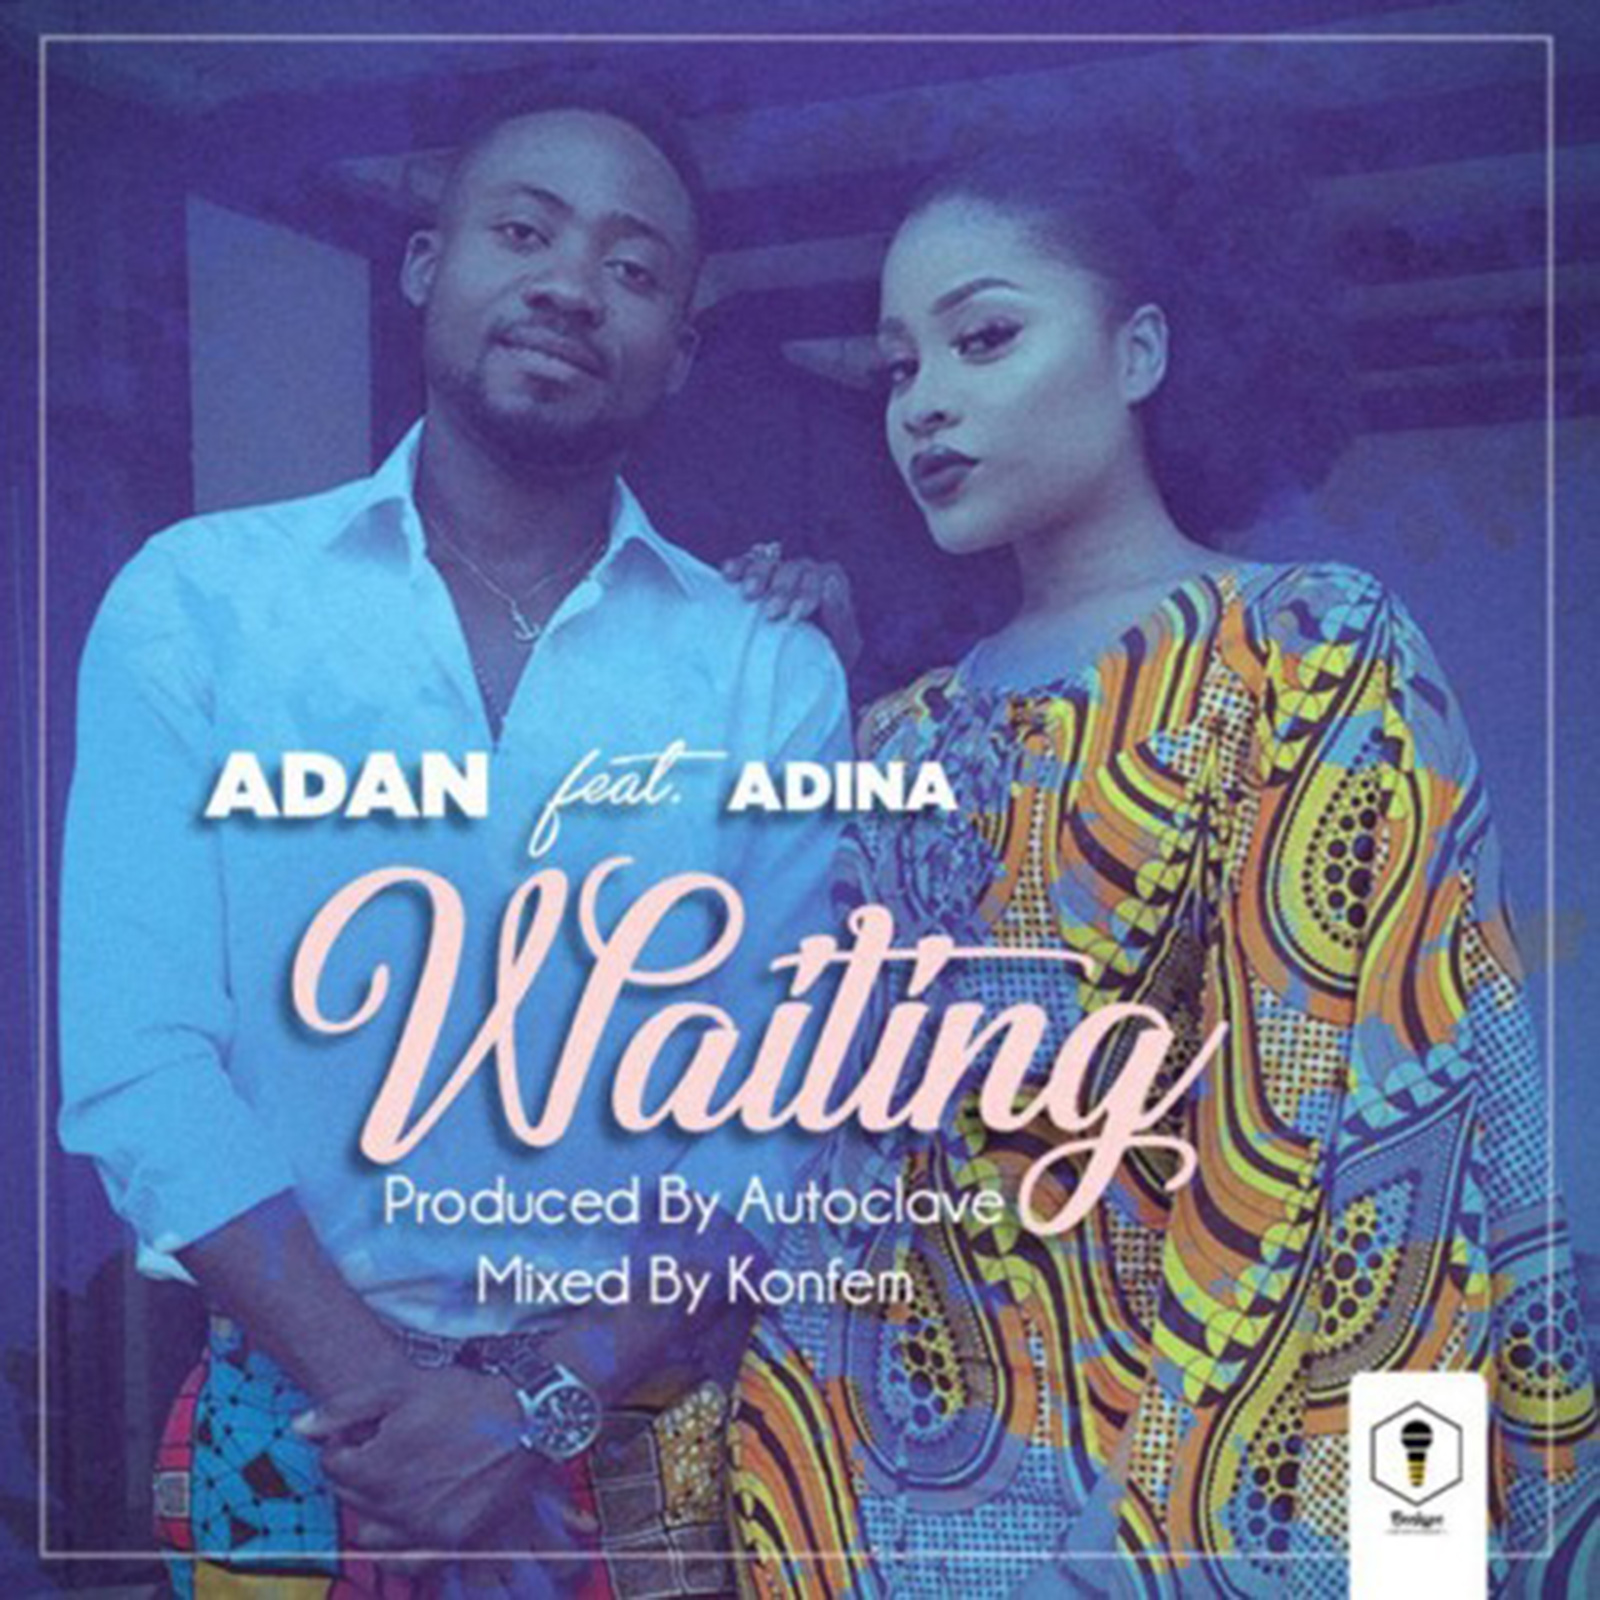 Waiting by Adan feat. Adina